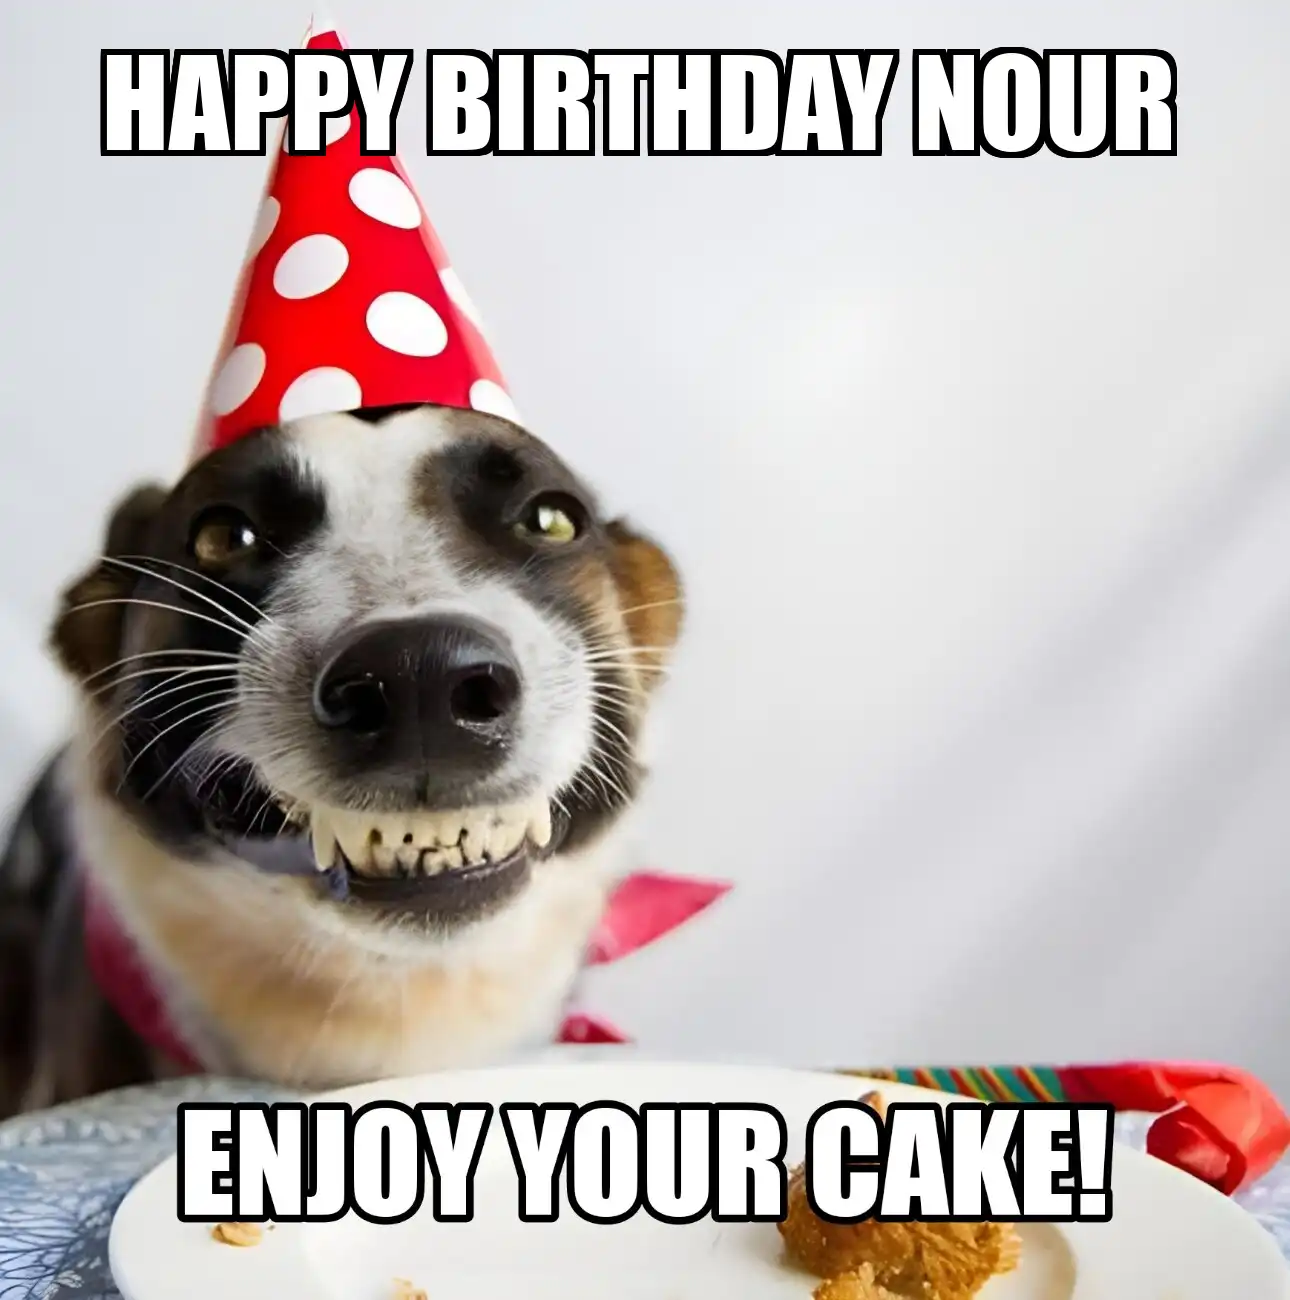 Happy Birthday Nour Enjoy Your Cake Dog Meme